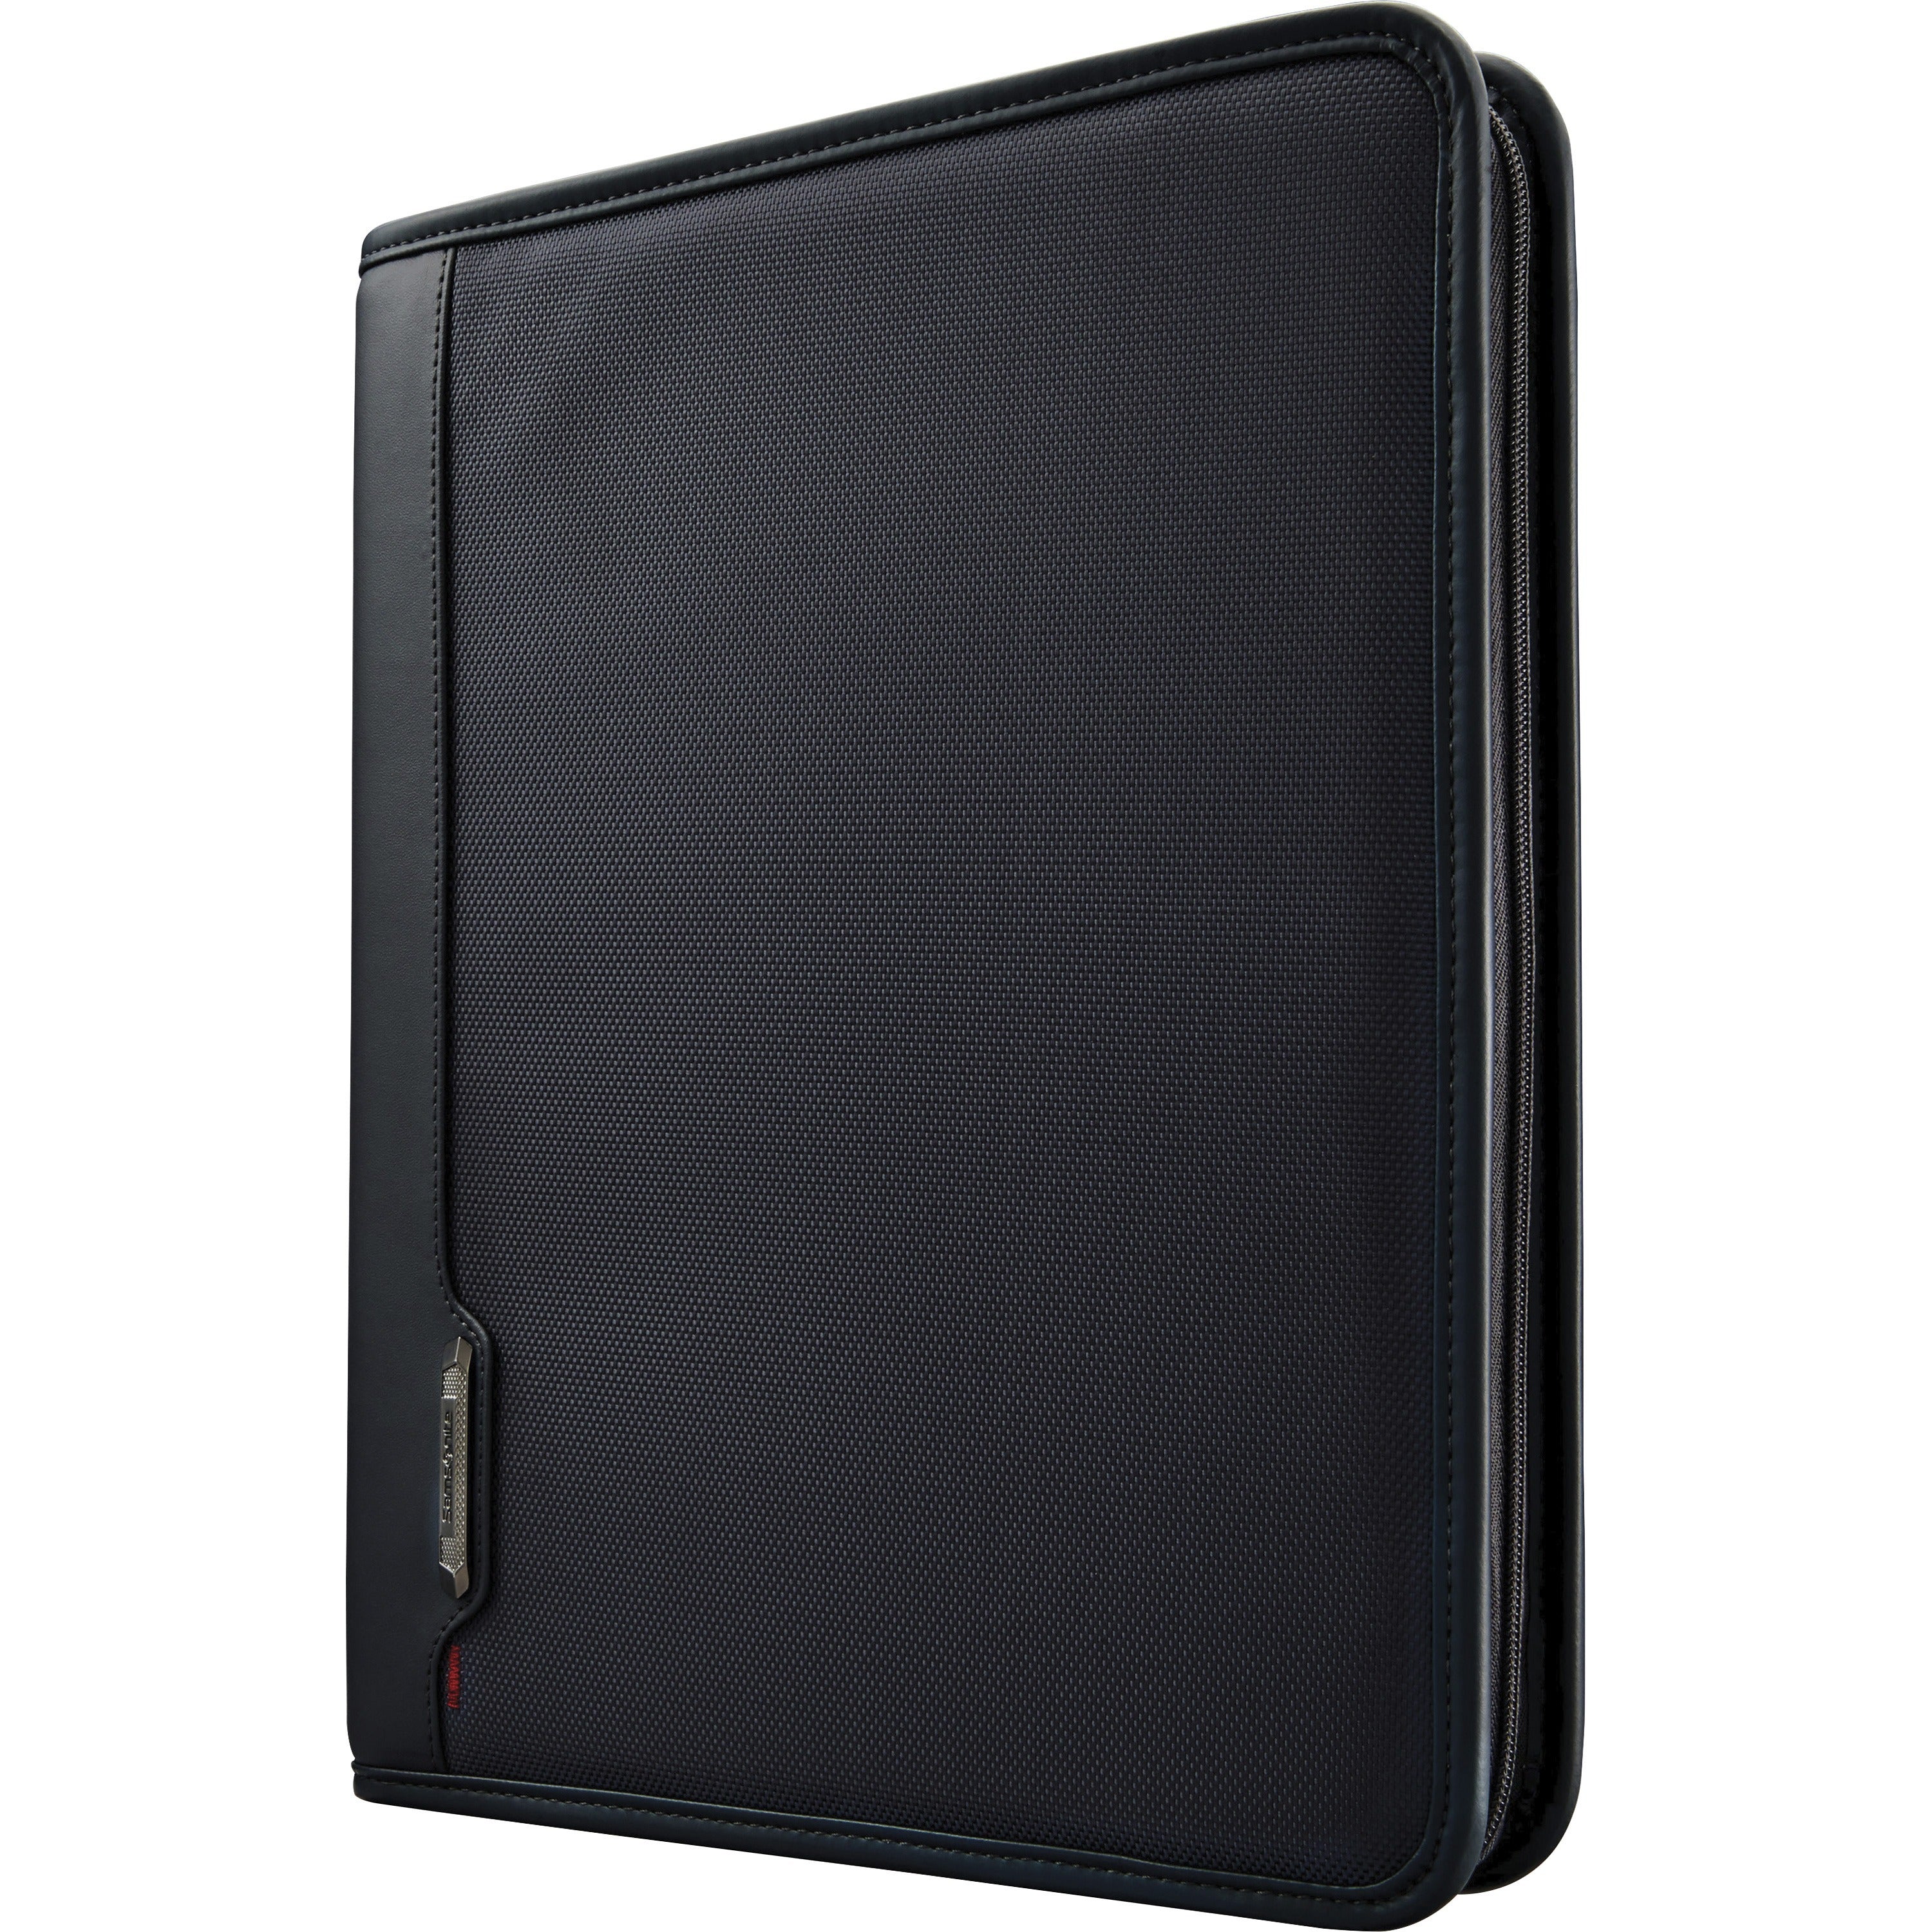 samsonite-carrying-case-portfolio-tablet-black-scuff-resistant-scratch-resistant-ballistic-fabric-body-131-height-x-16-width-x-103-depth-1-each_sml1164651041 - 2